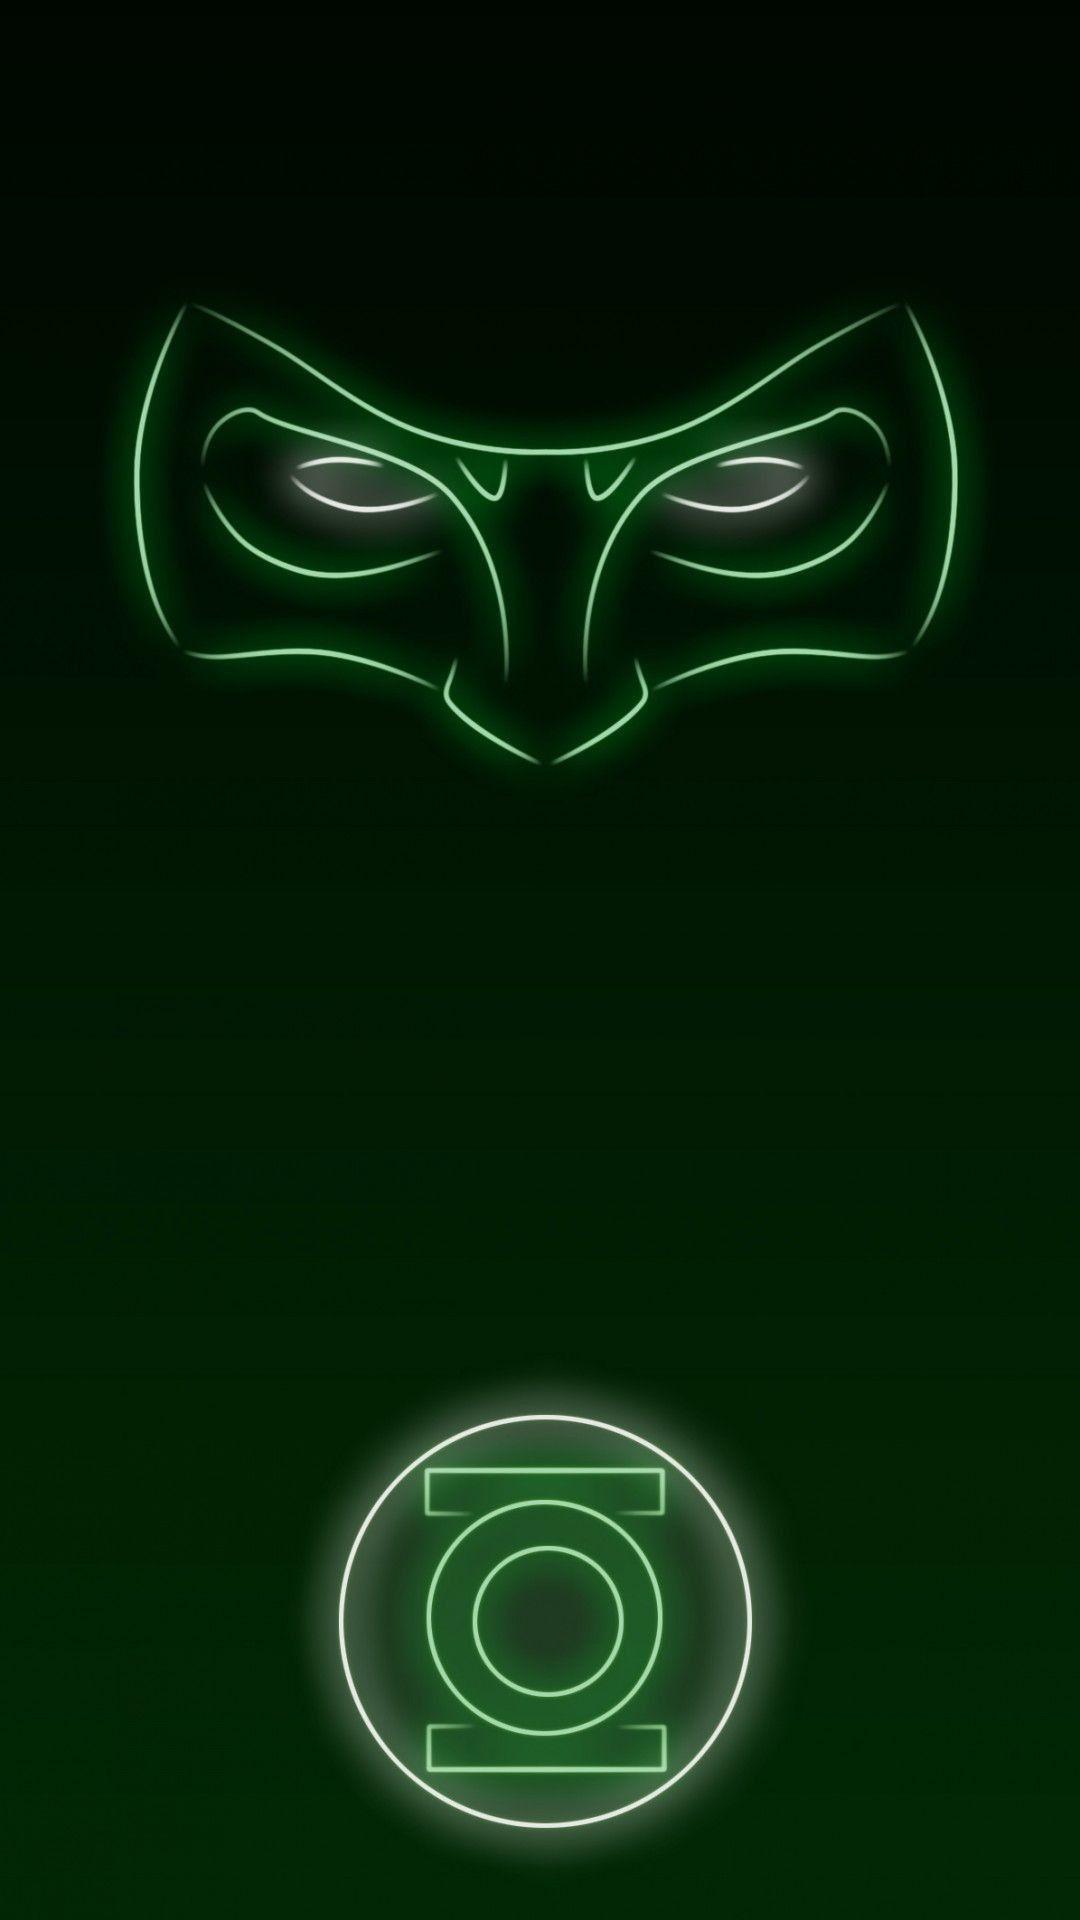 tron green lantern suit idea test 1  Green lantern wallpaper Green lantern  comics Green lantern logo